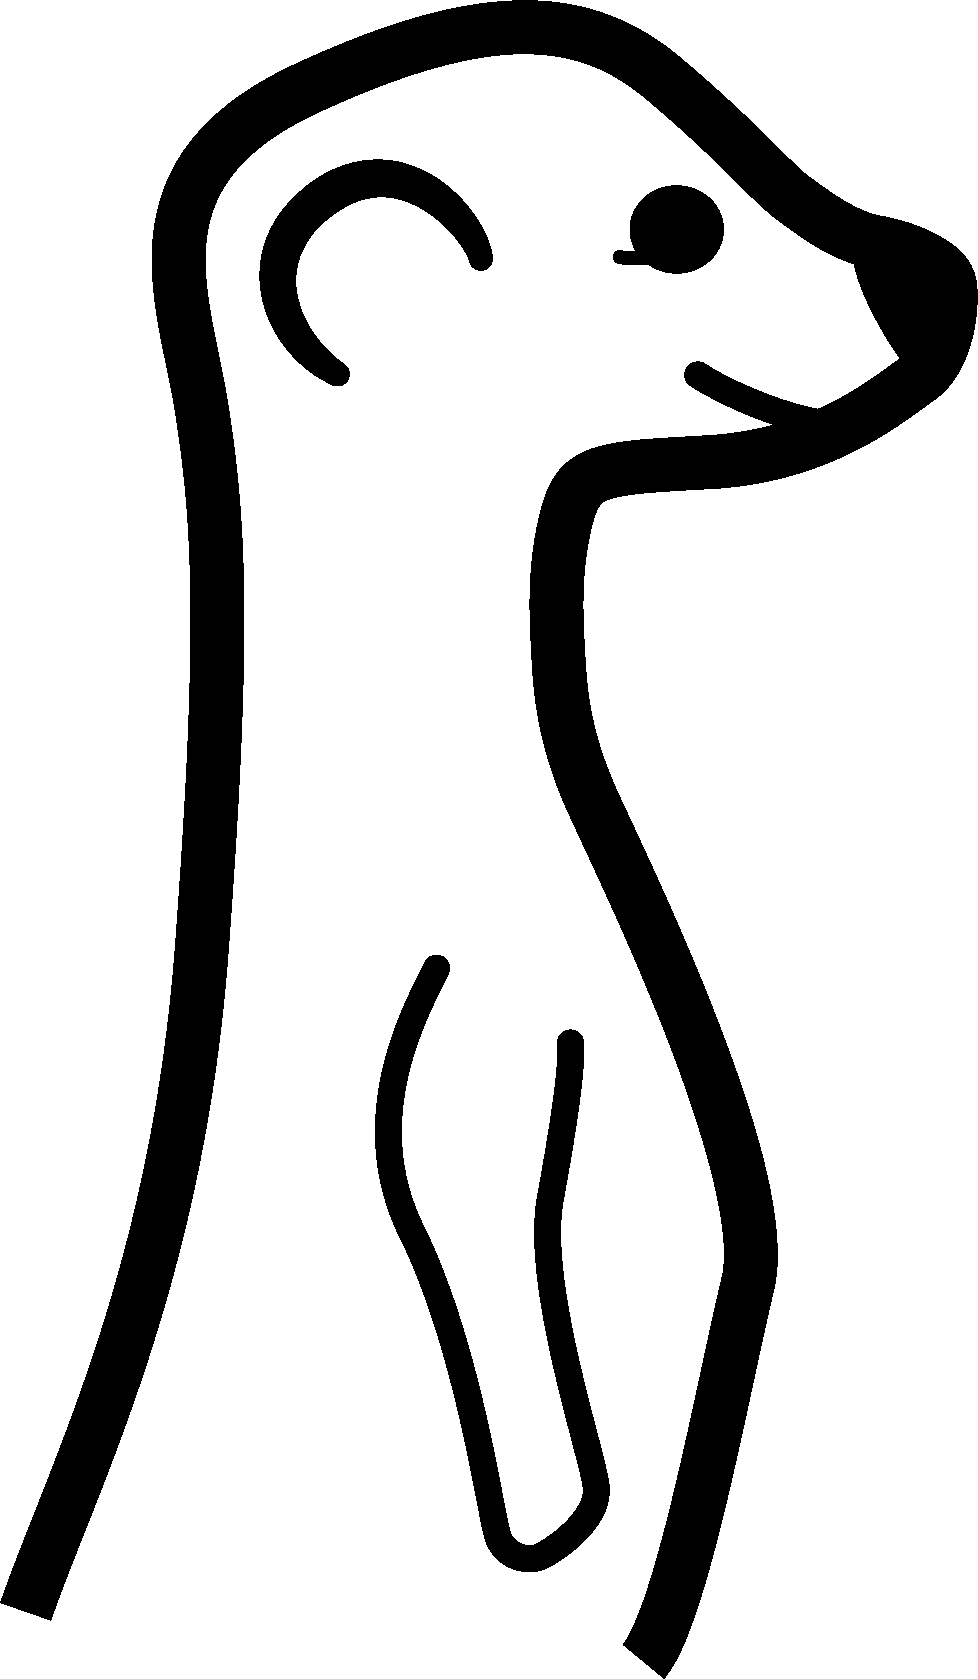 Meerkat Silhouette Graphic PNG image